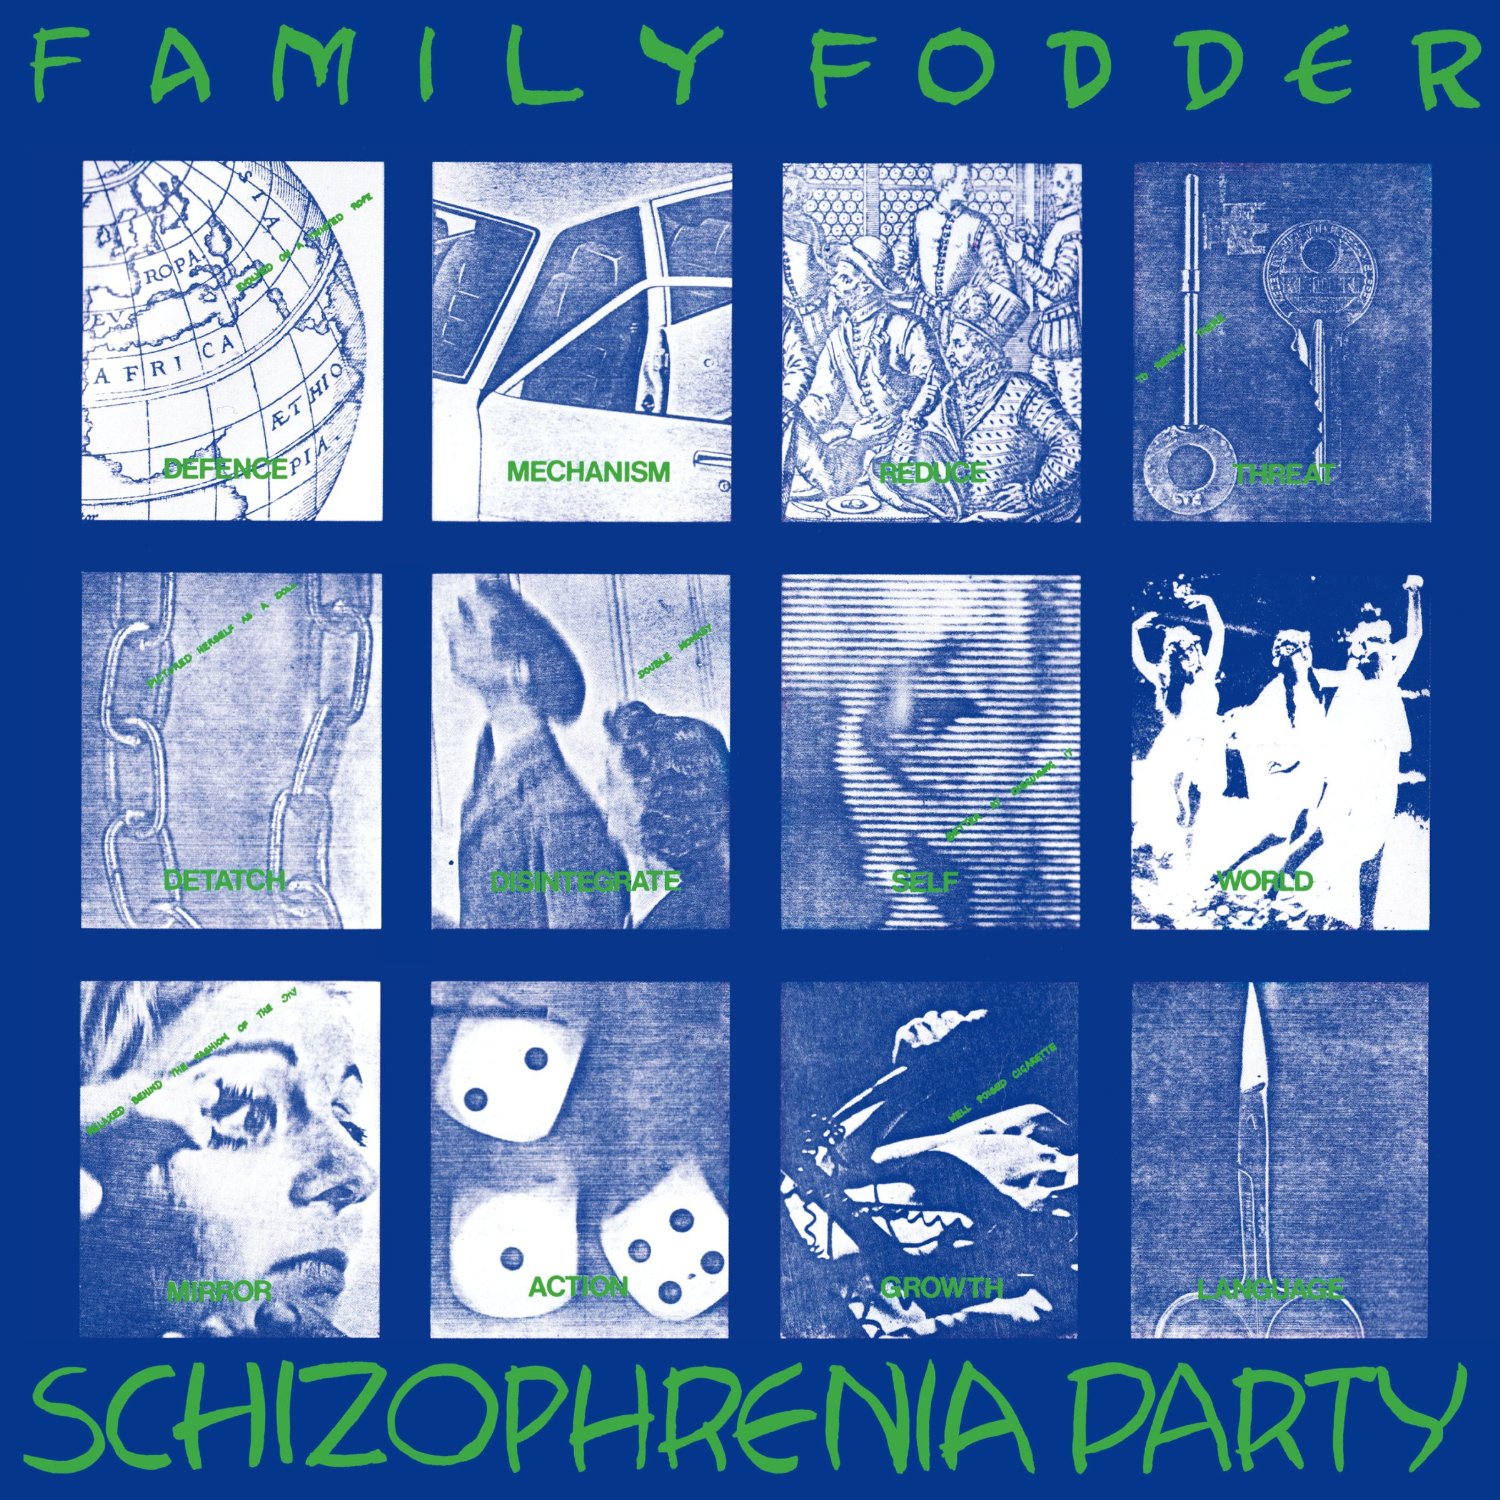 Schizophrenia Party (Director’s Cut) / Family Fodderのジャケット